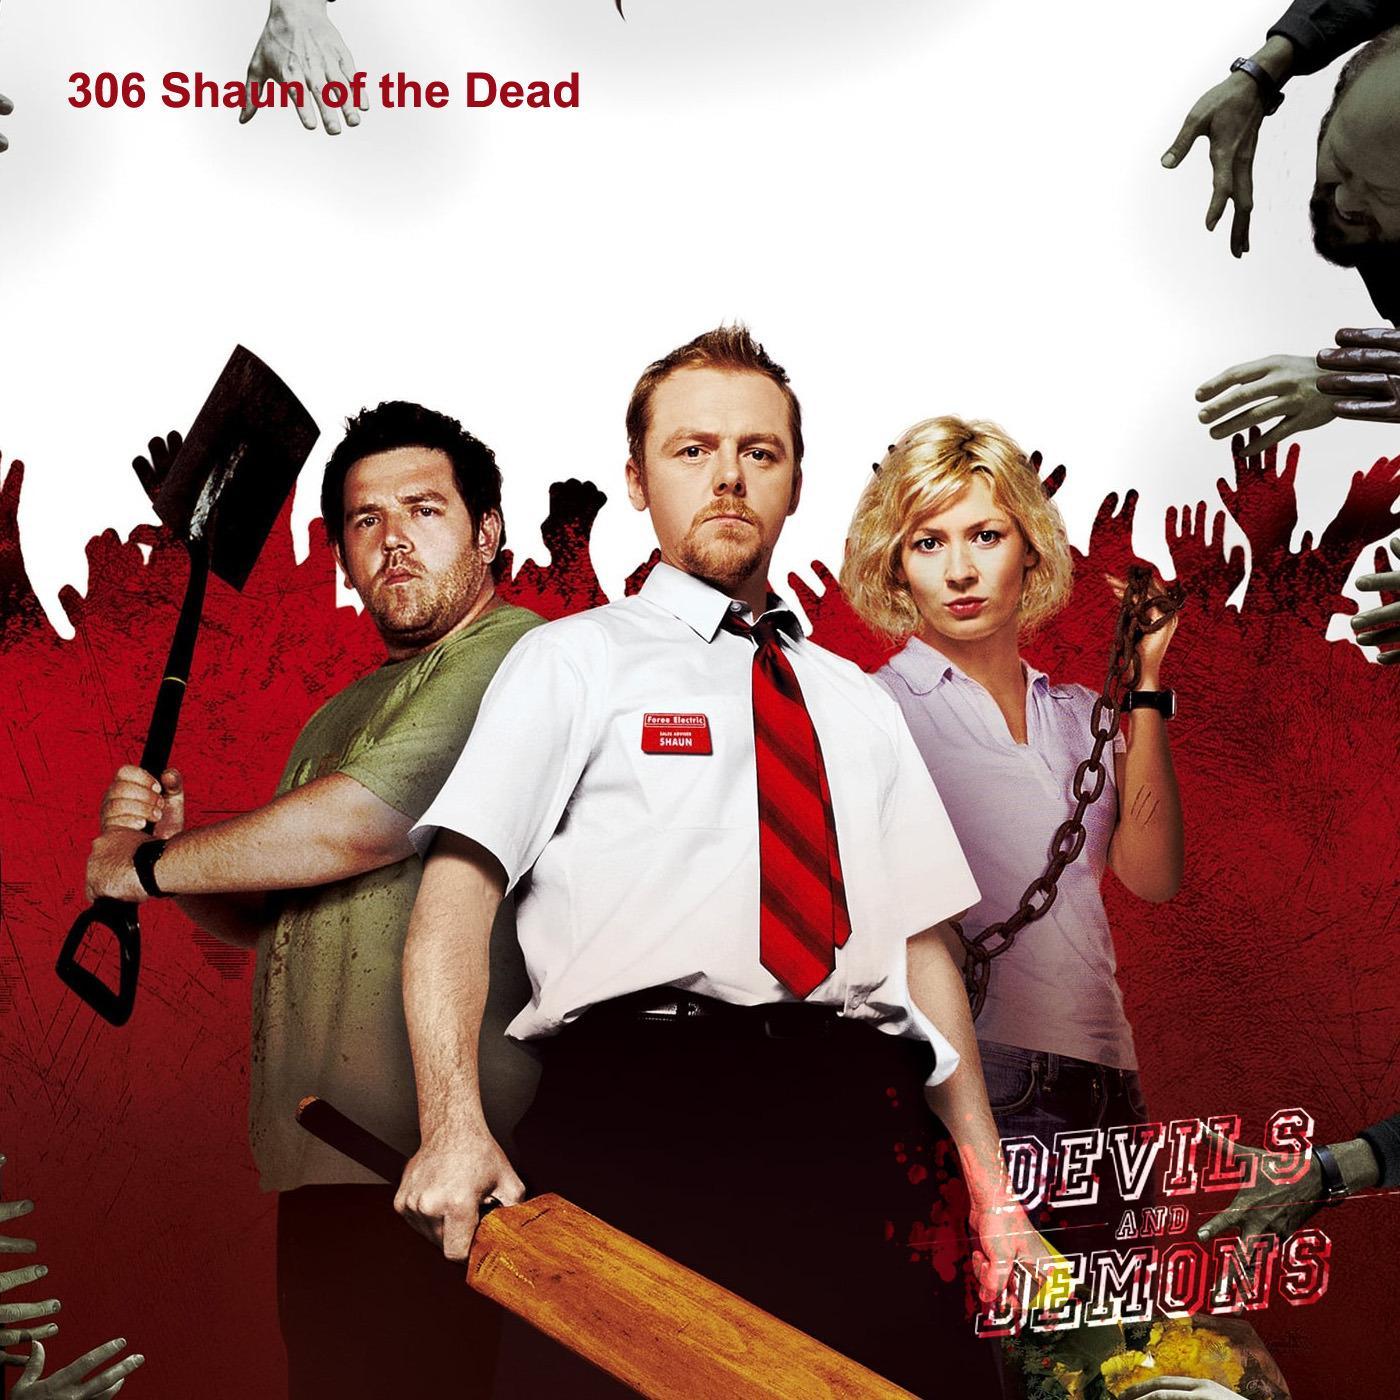 306 Shaun of the Dead (2004)